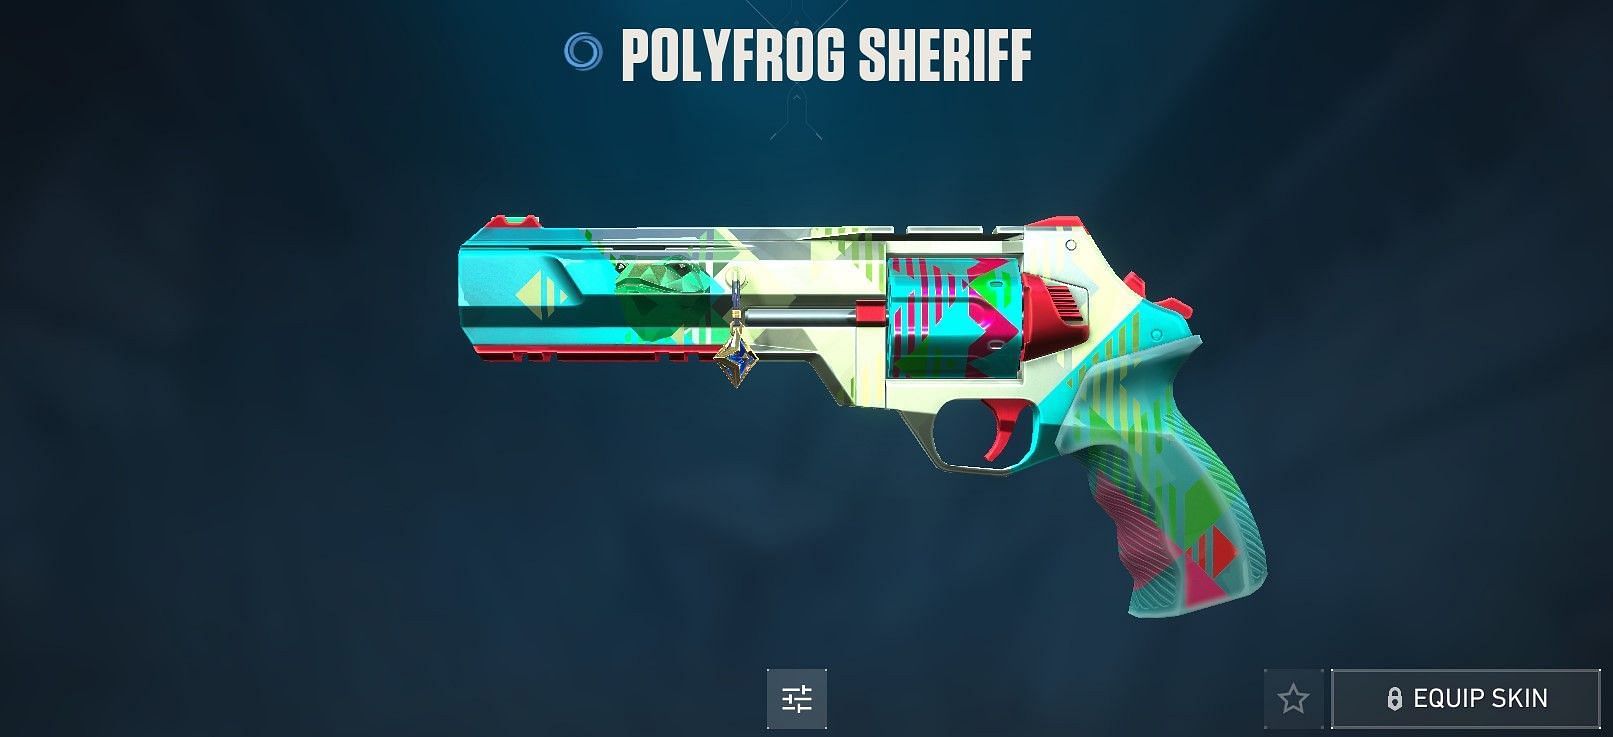 Polyfrog Sheriff (Image via Riot Games)